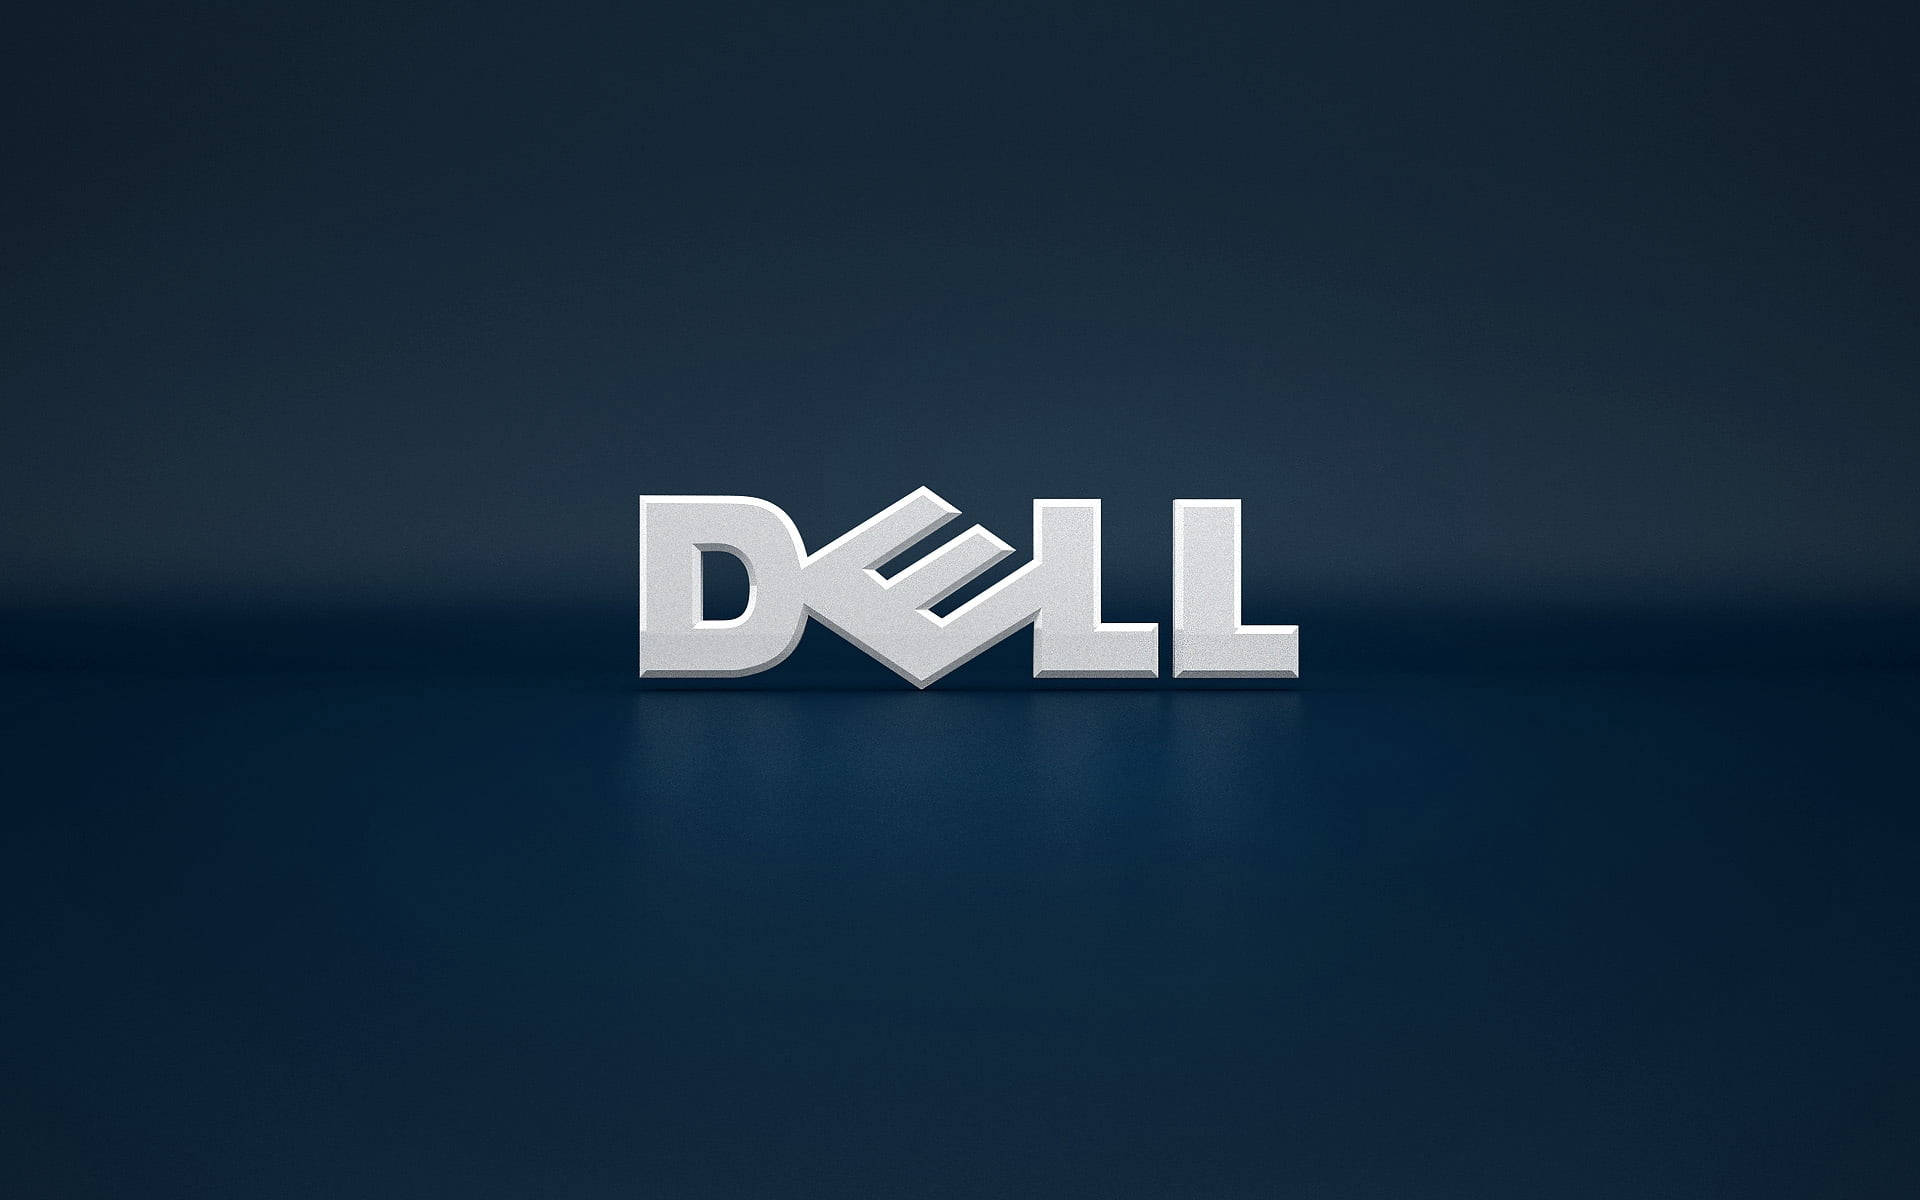 Dell Laptop Background Wallpaper